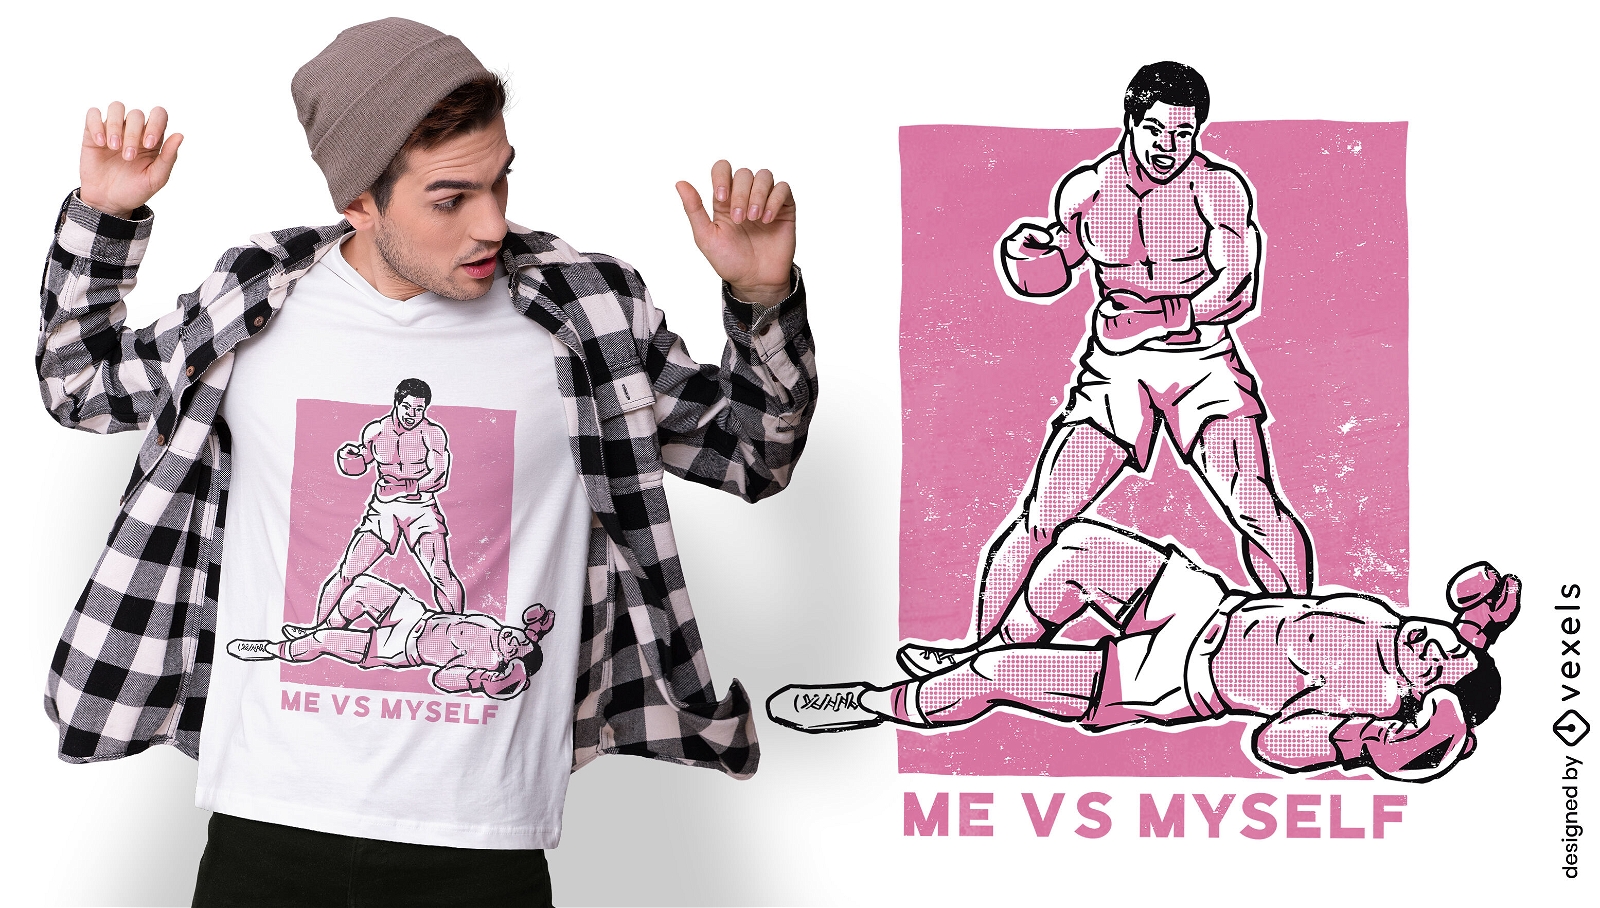 Me vs myself funny boxers t-shirt design